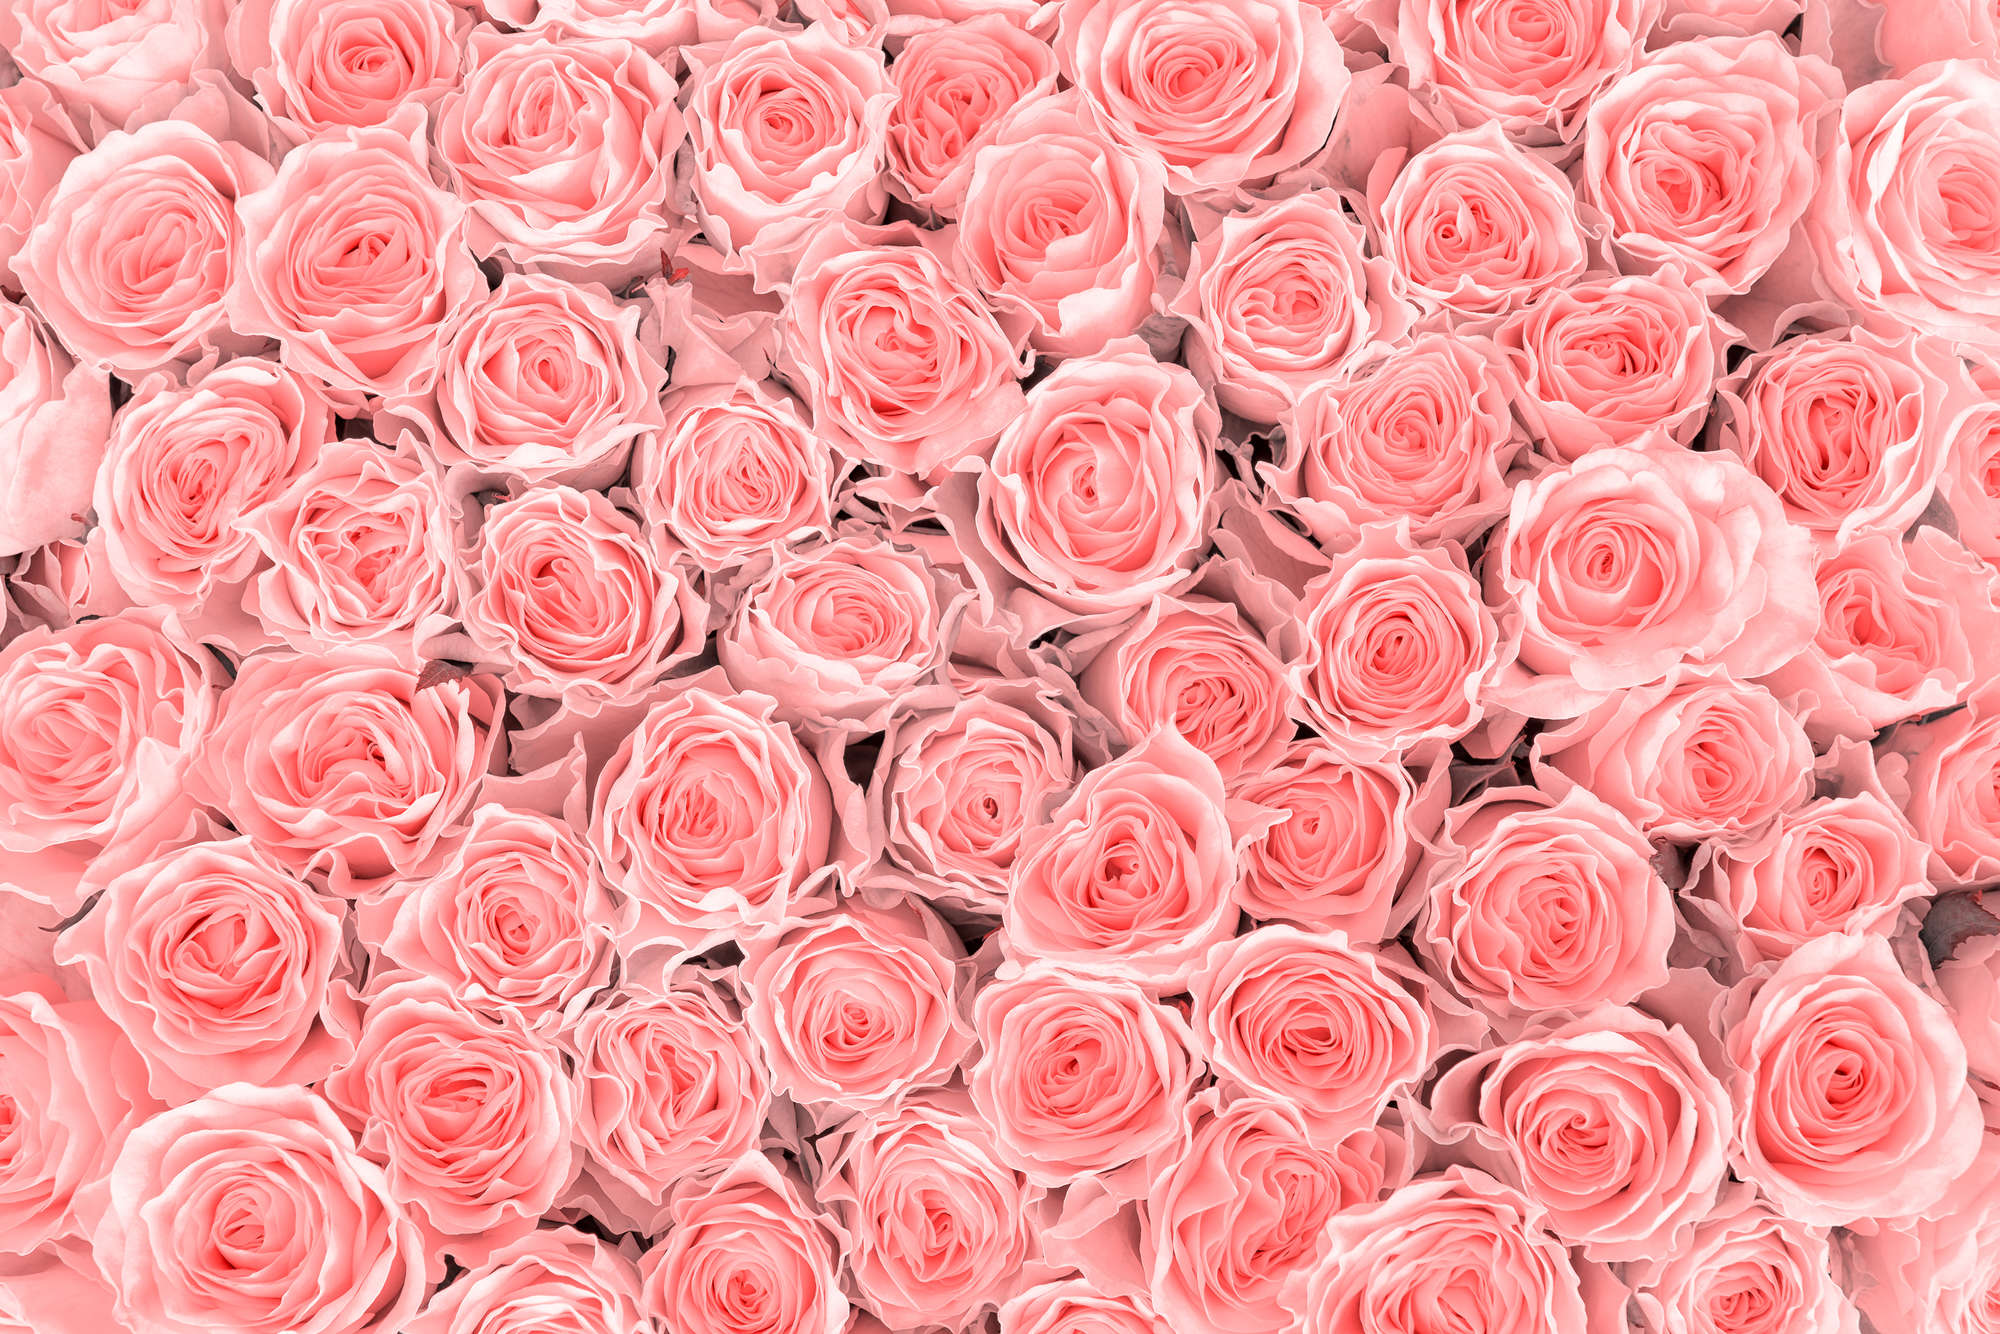             Pflanzen Fototapete pinke Rosen auf Matt Glattvlies
        